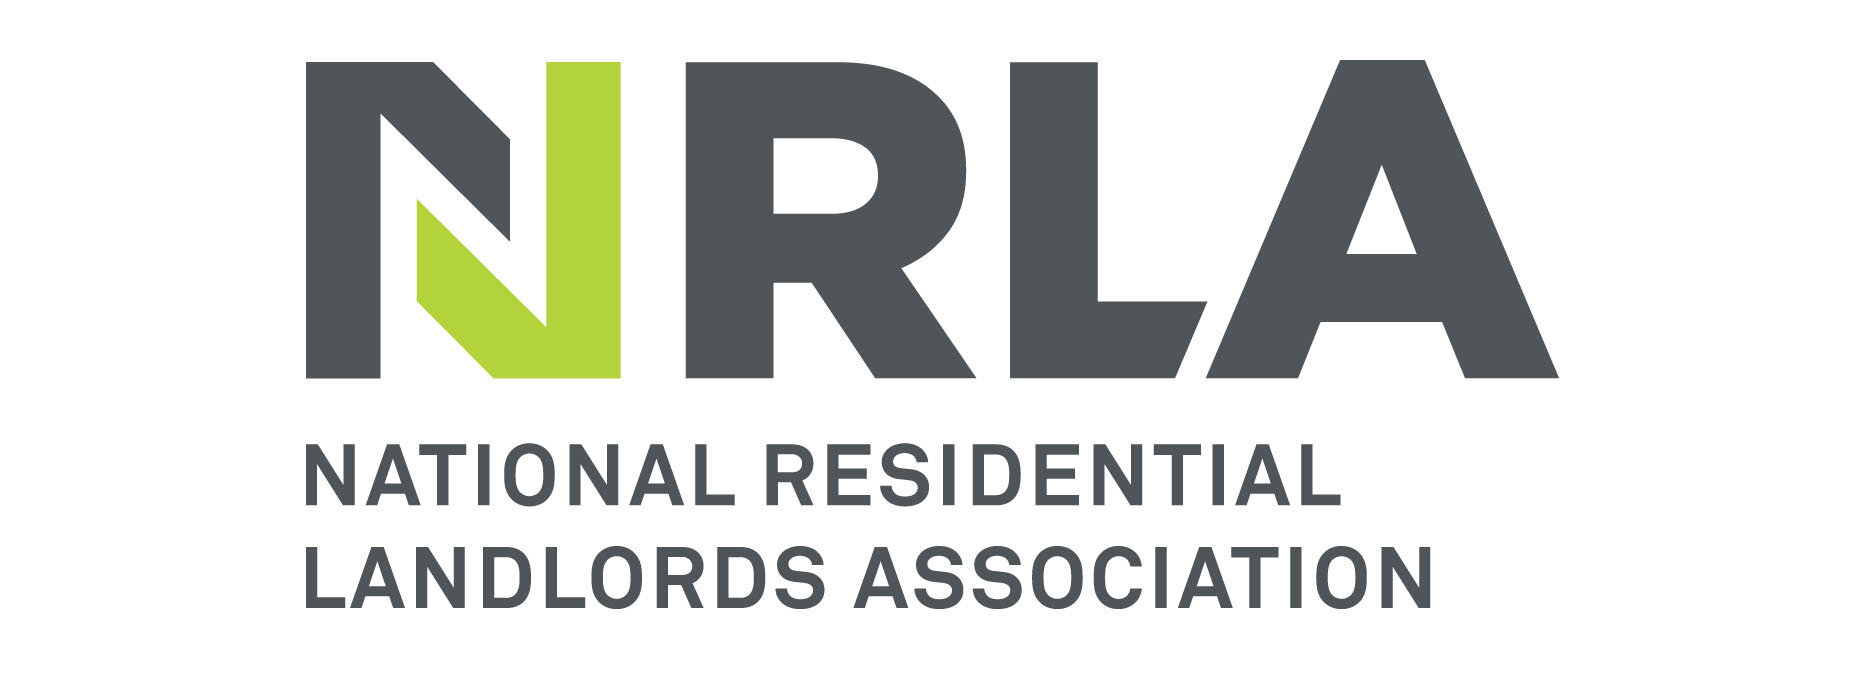 NRLA_Logo-rgb-2.jpg